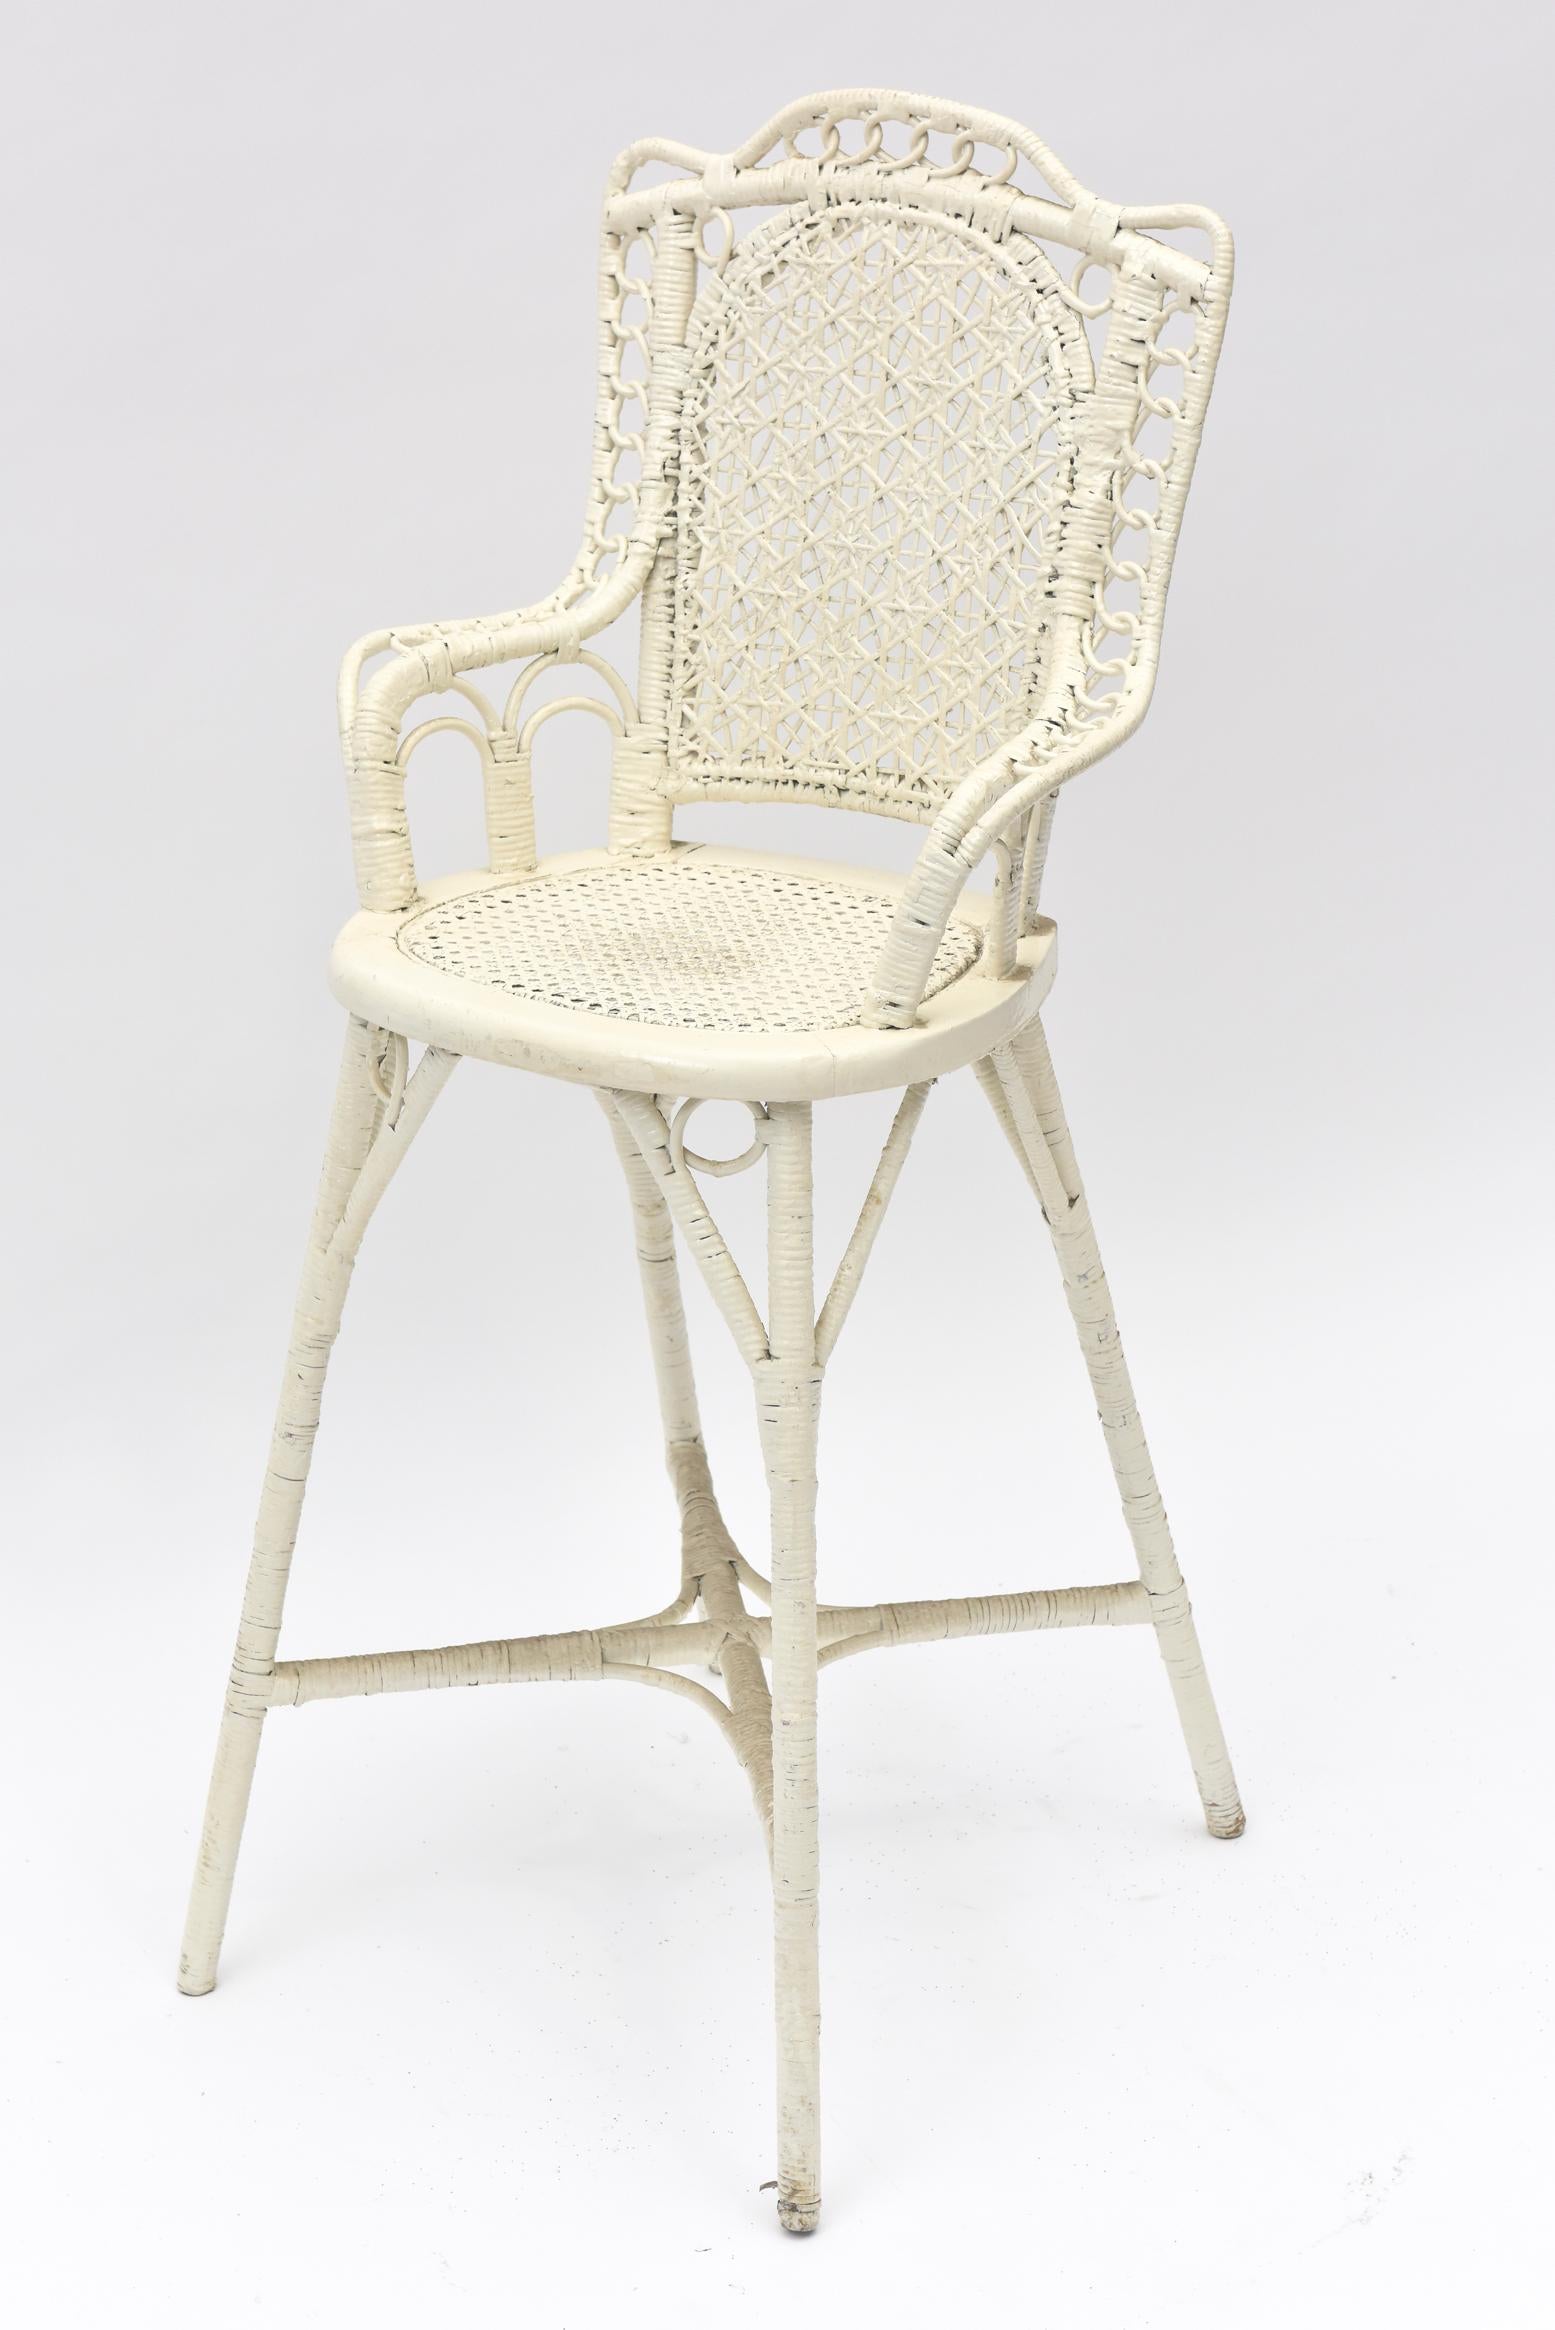 antique wicker high chair